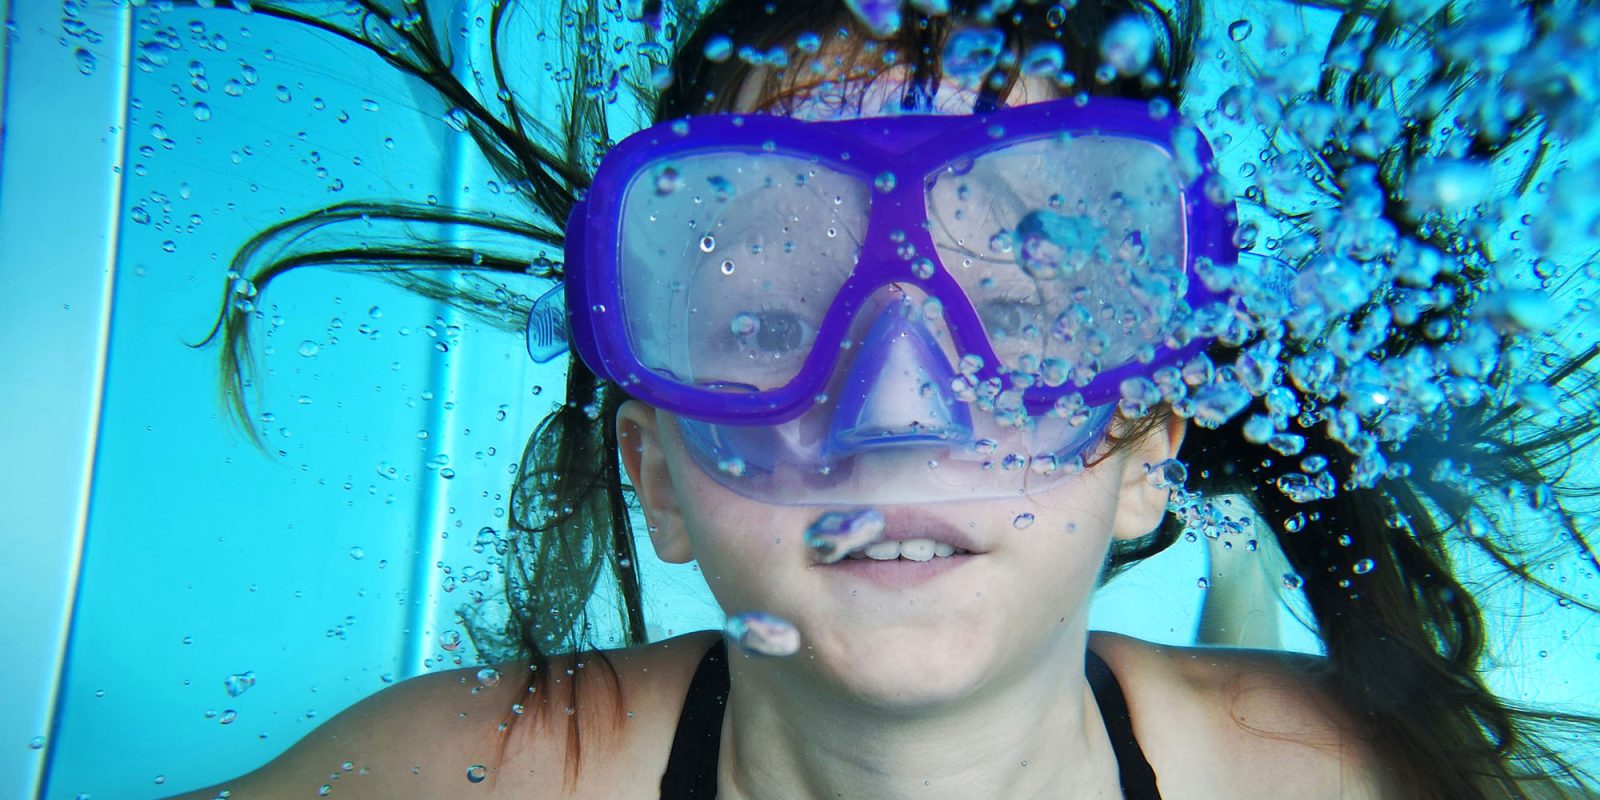 Apple Watch emergency SOS drowning | Child underwater in a pool